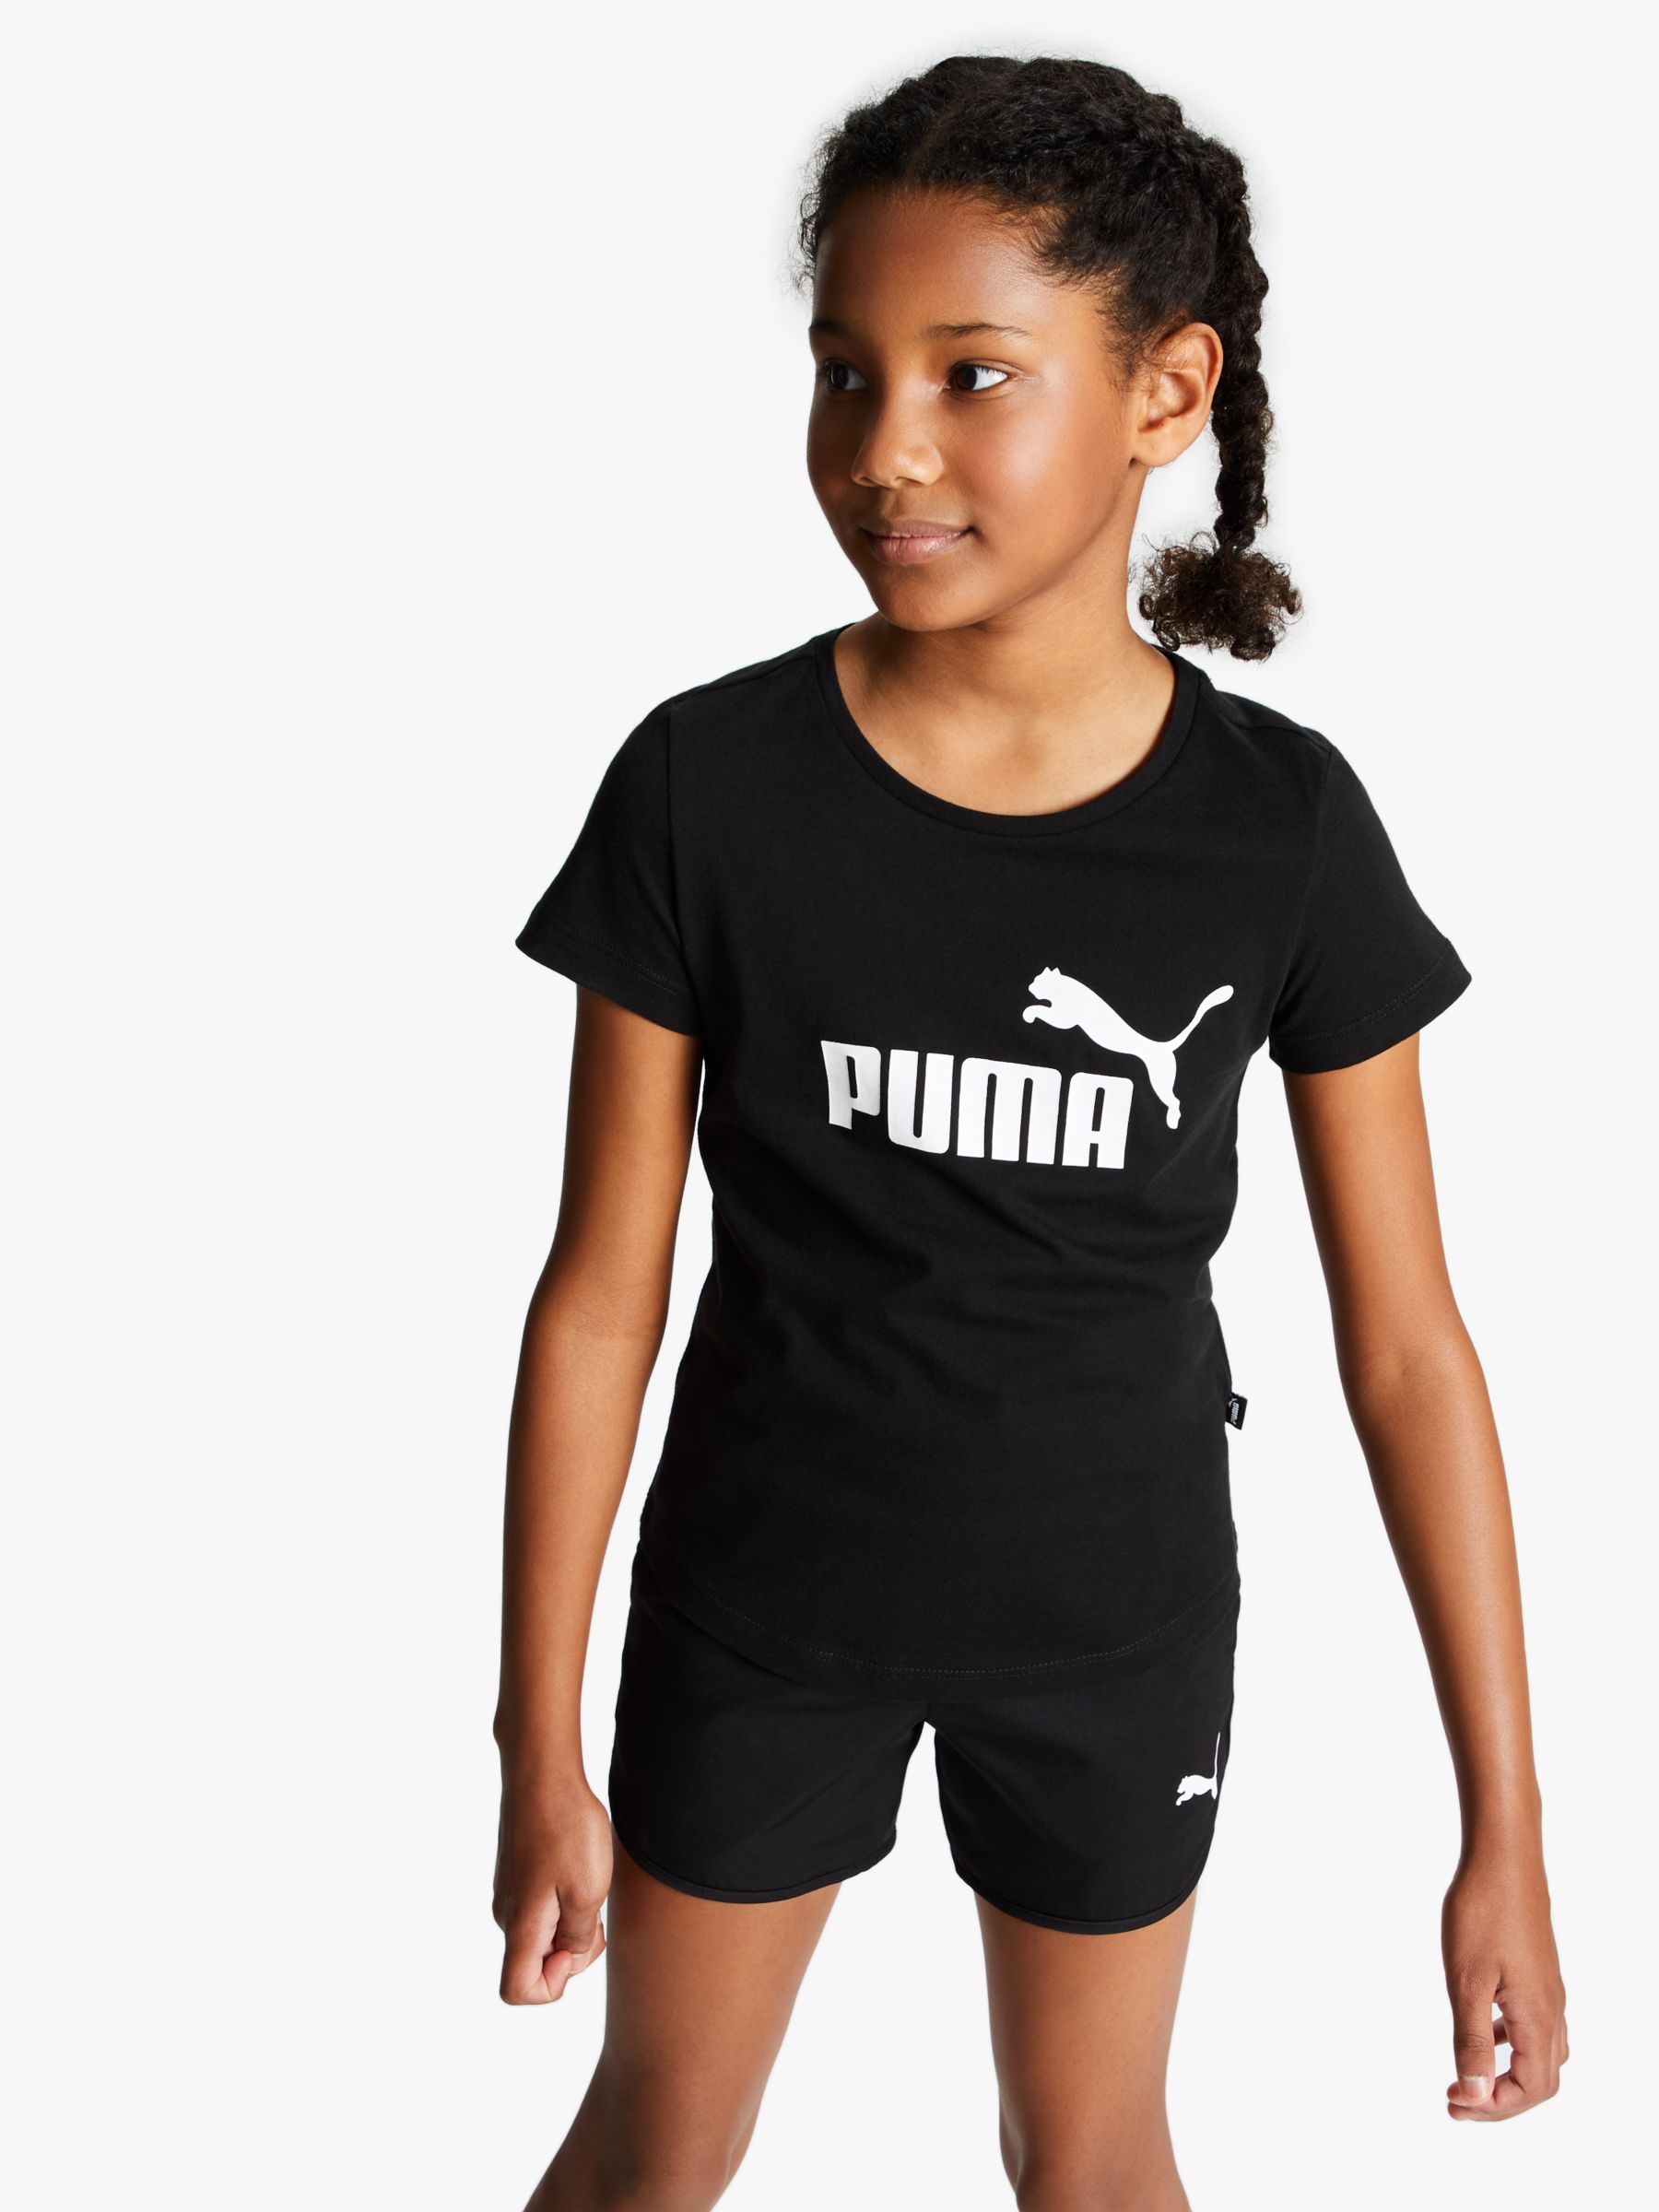 puma shirts for girls